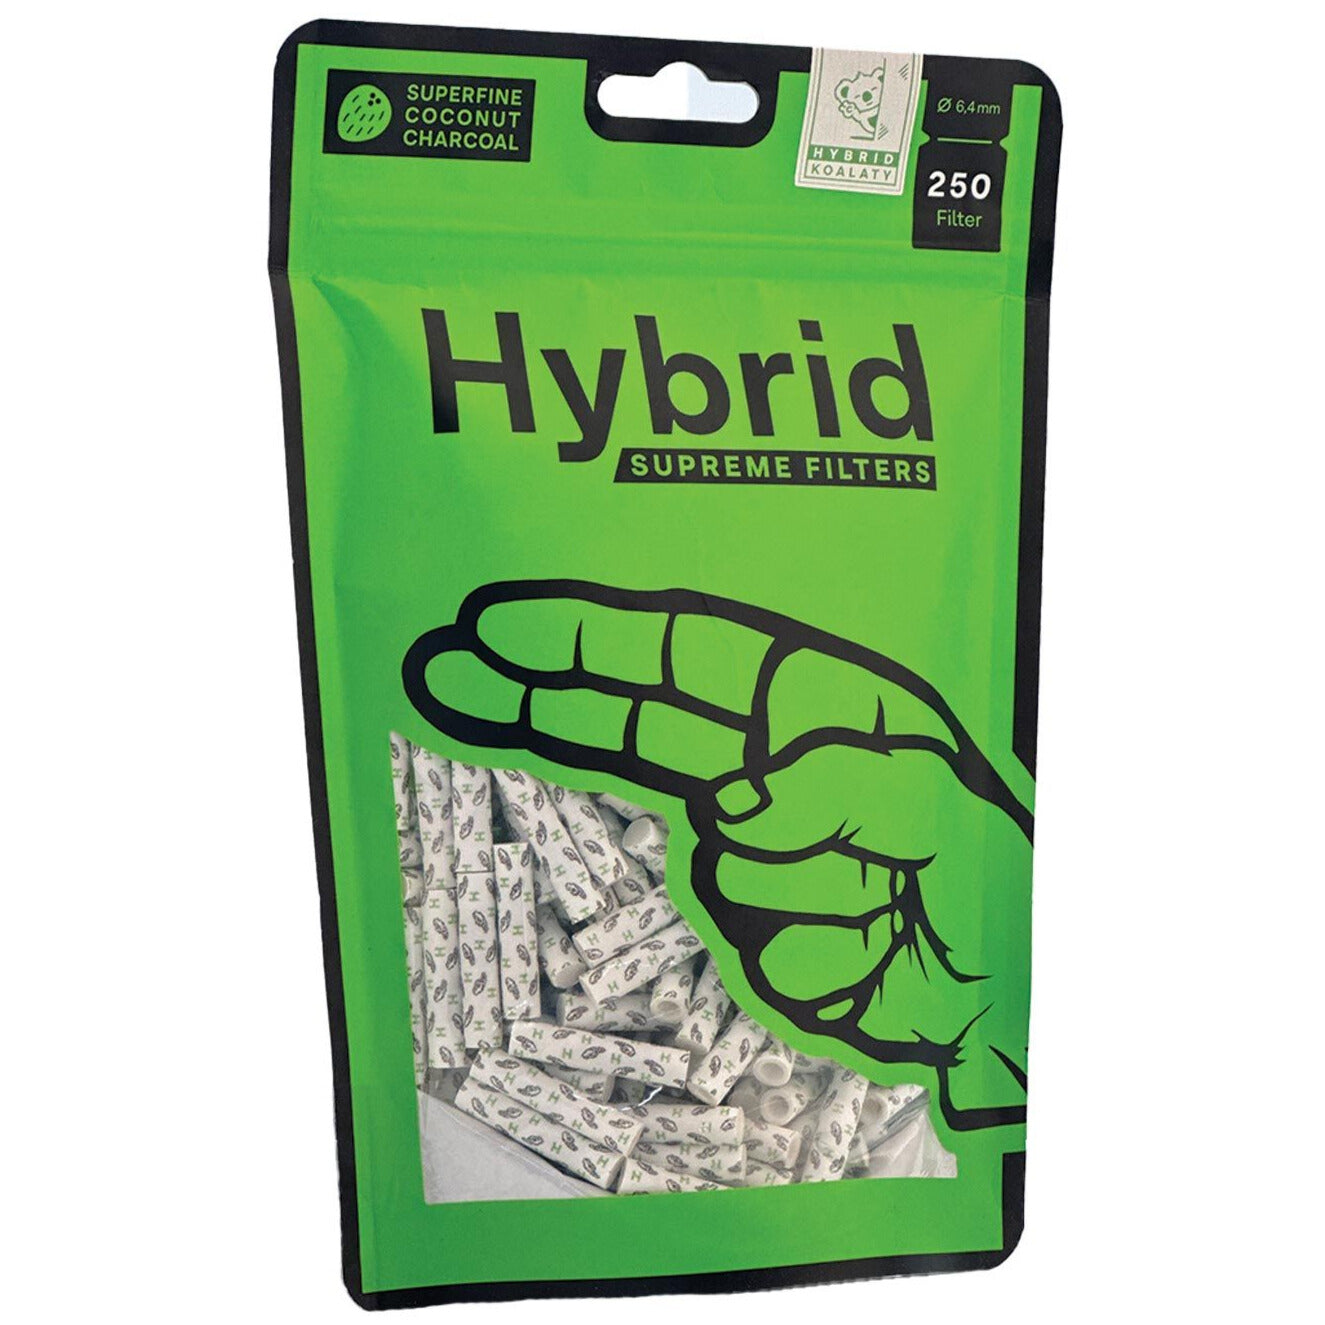 Hybrid Supreme Filters Bag 250 Pcs